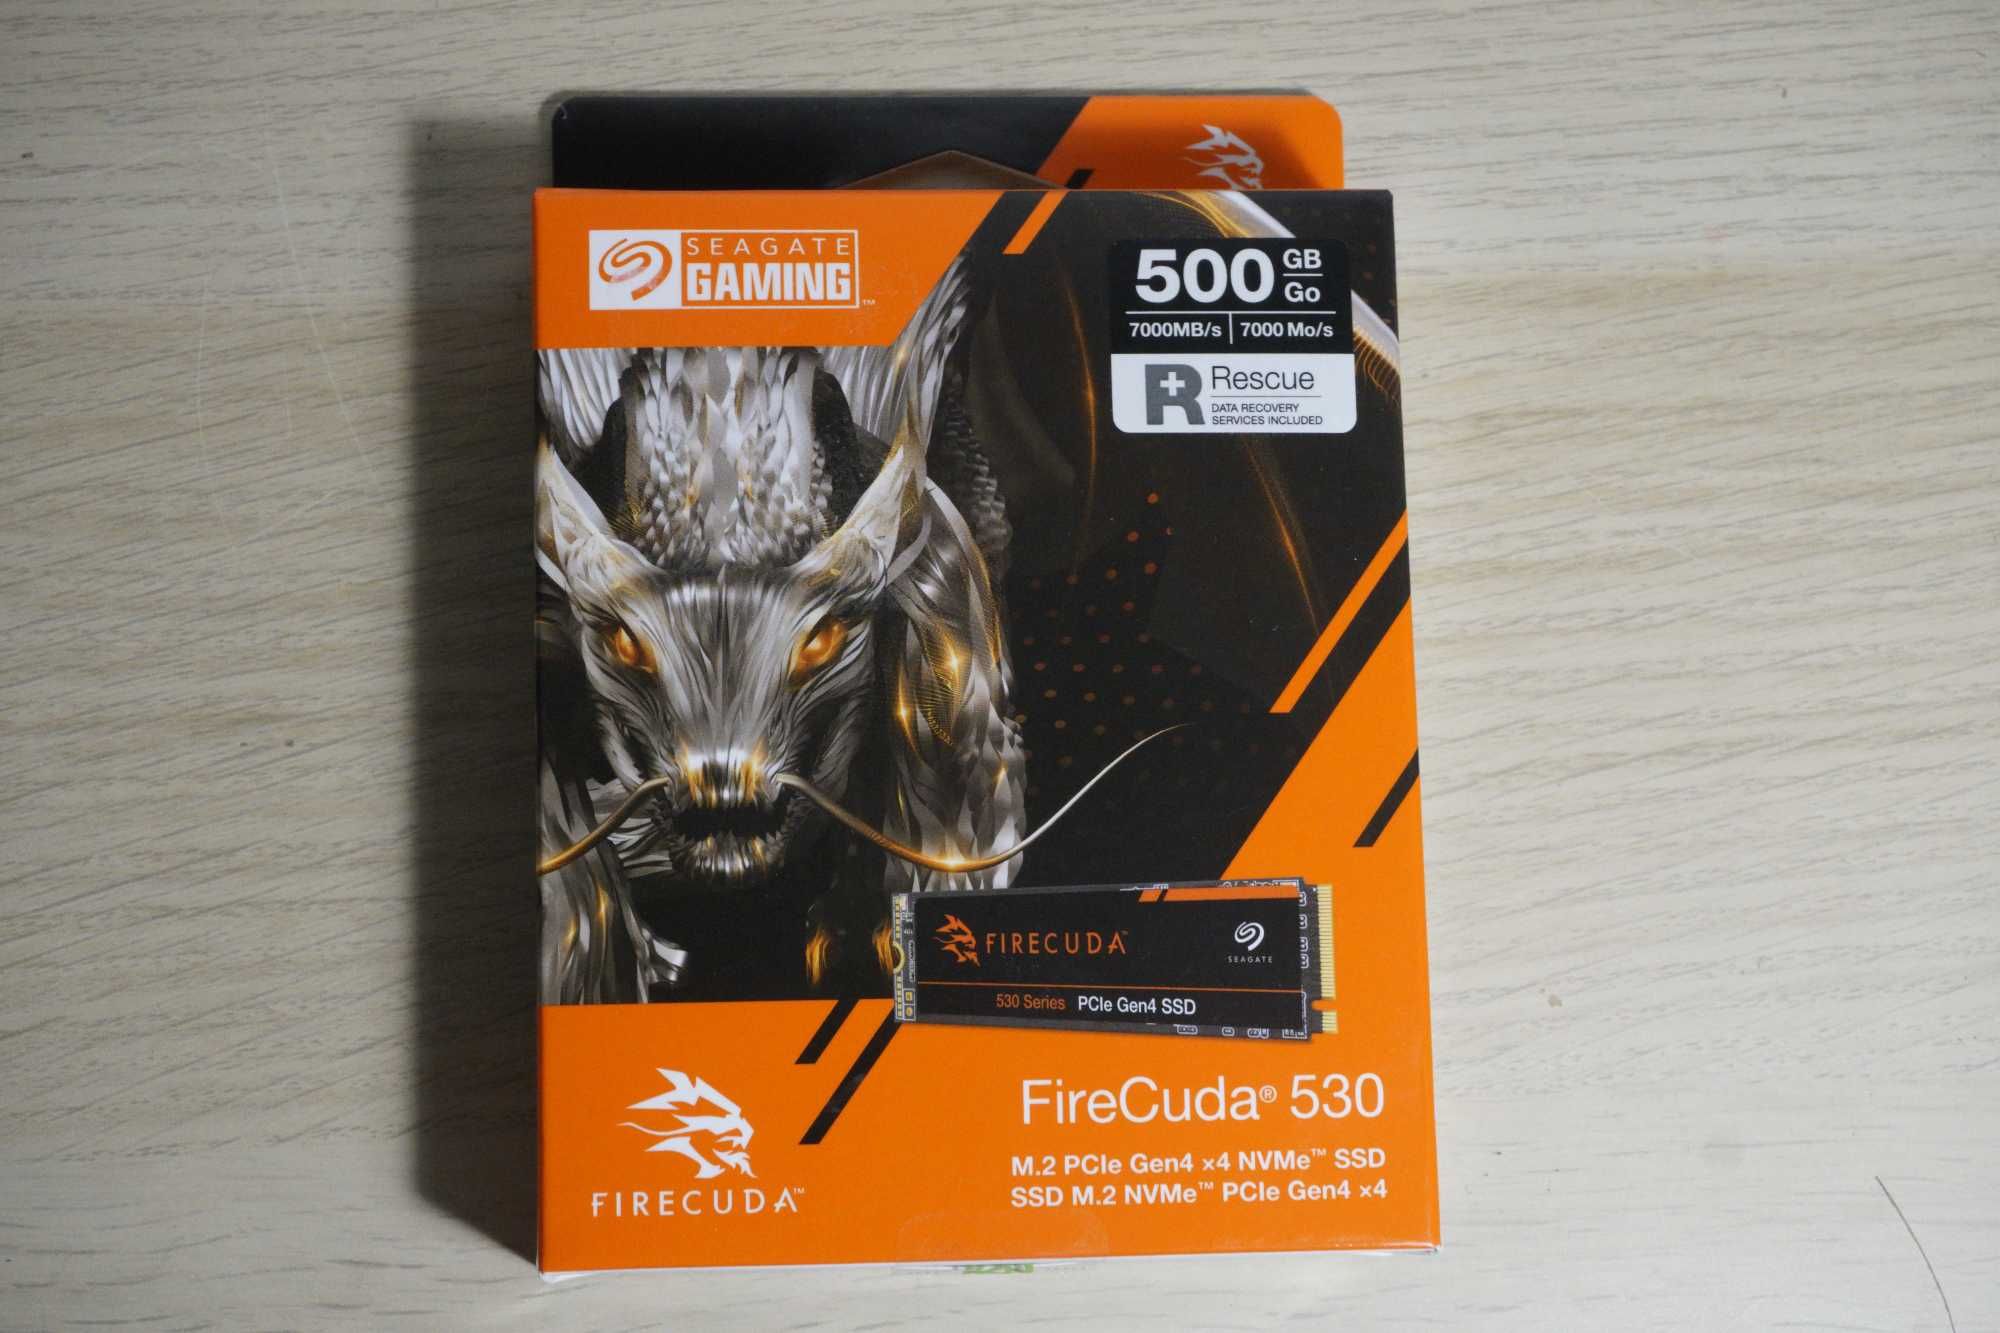 [Ново запечатано] 512GB 500GB m2 m.2 Nvme SSD Firecuda 530 - 7000mbs